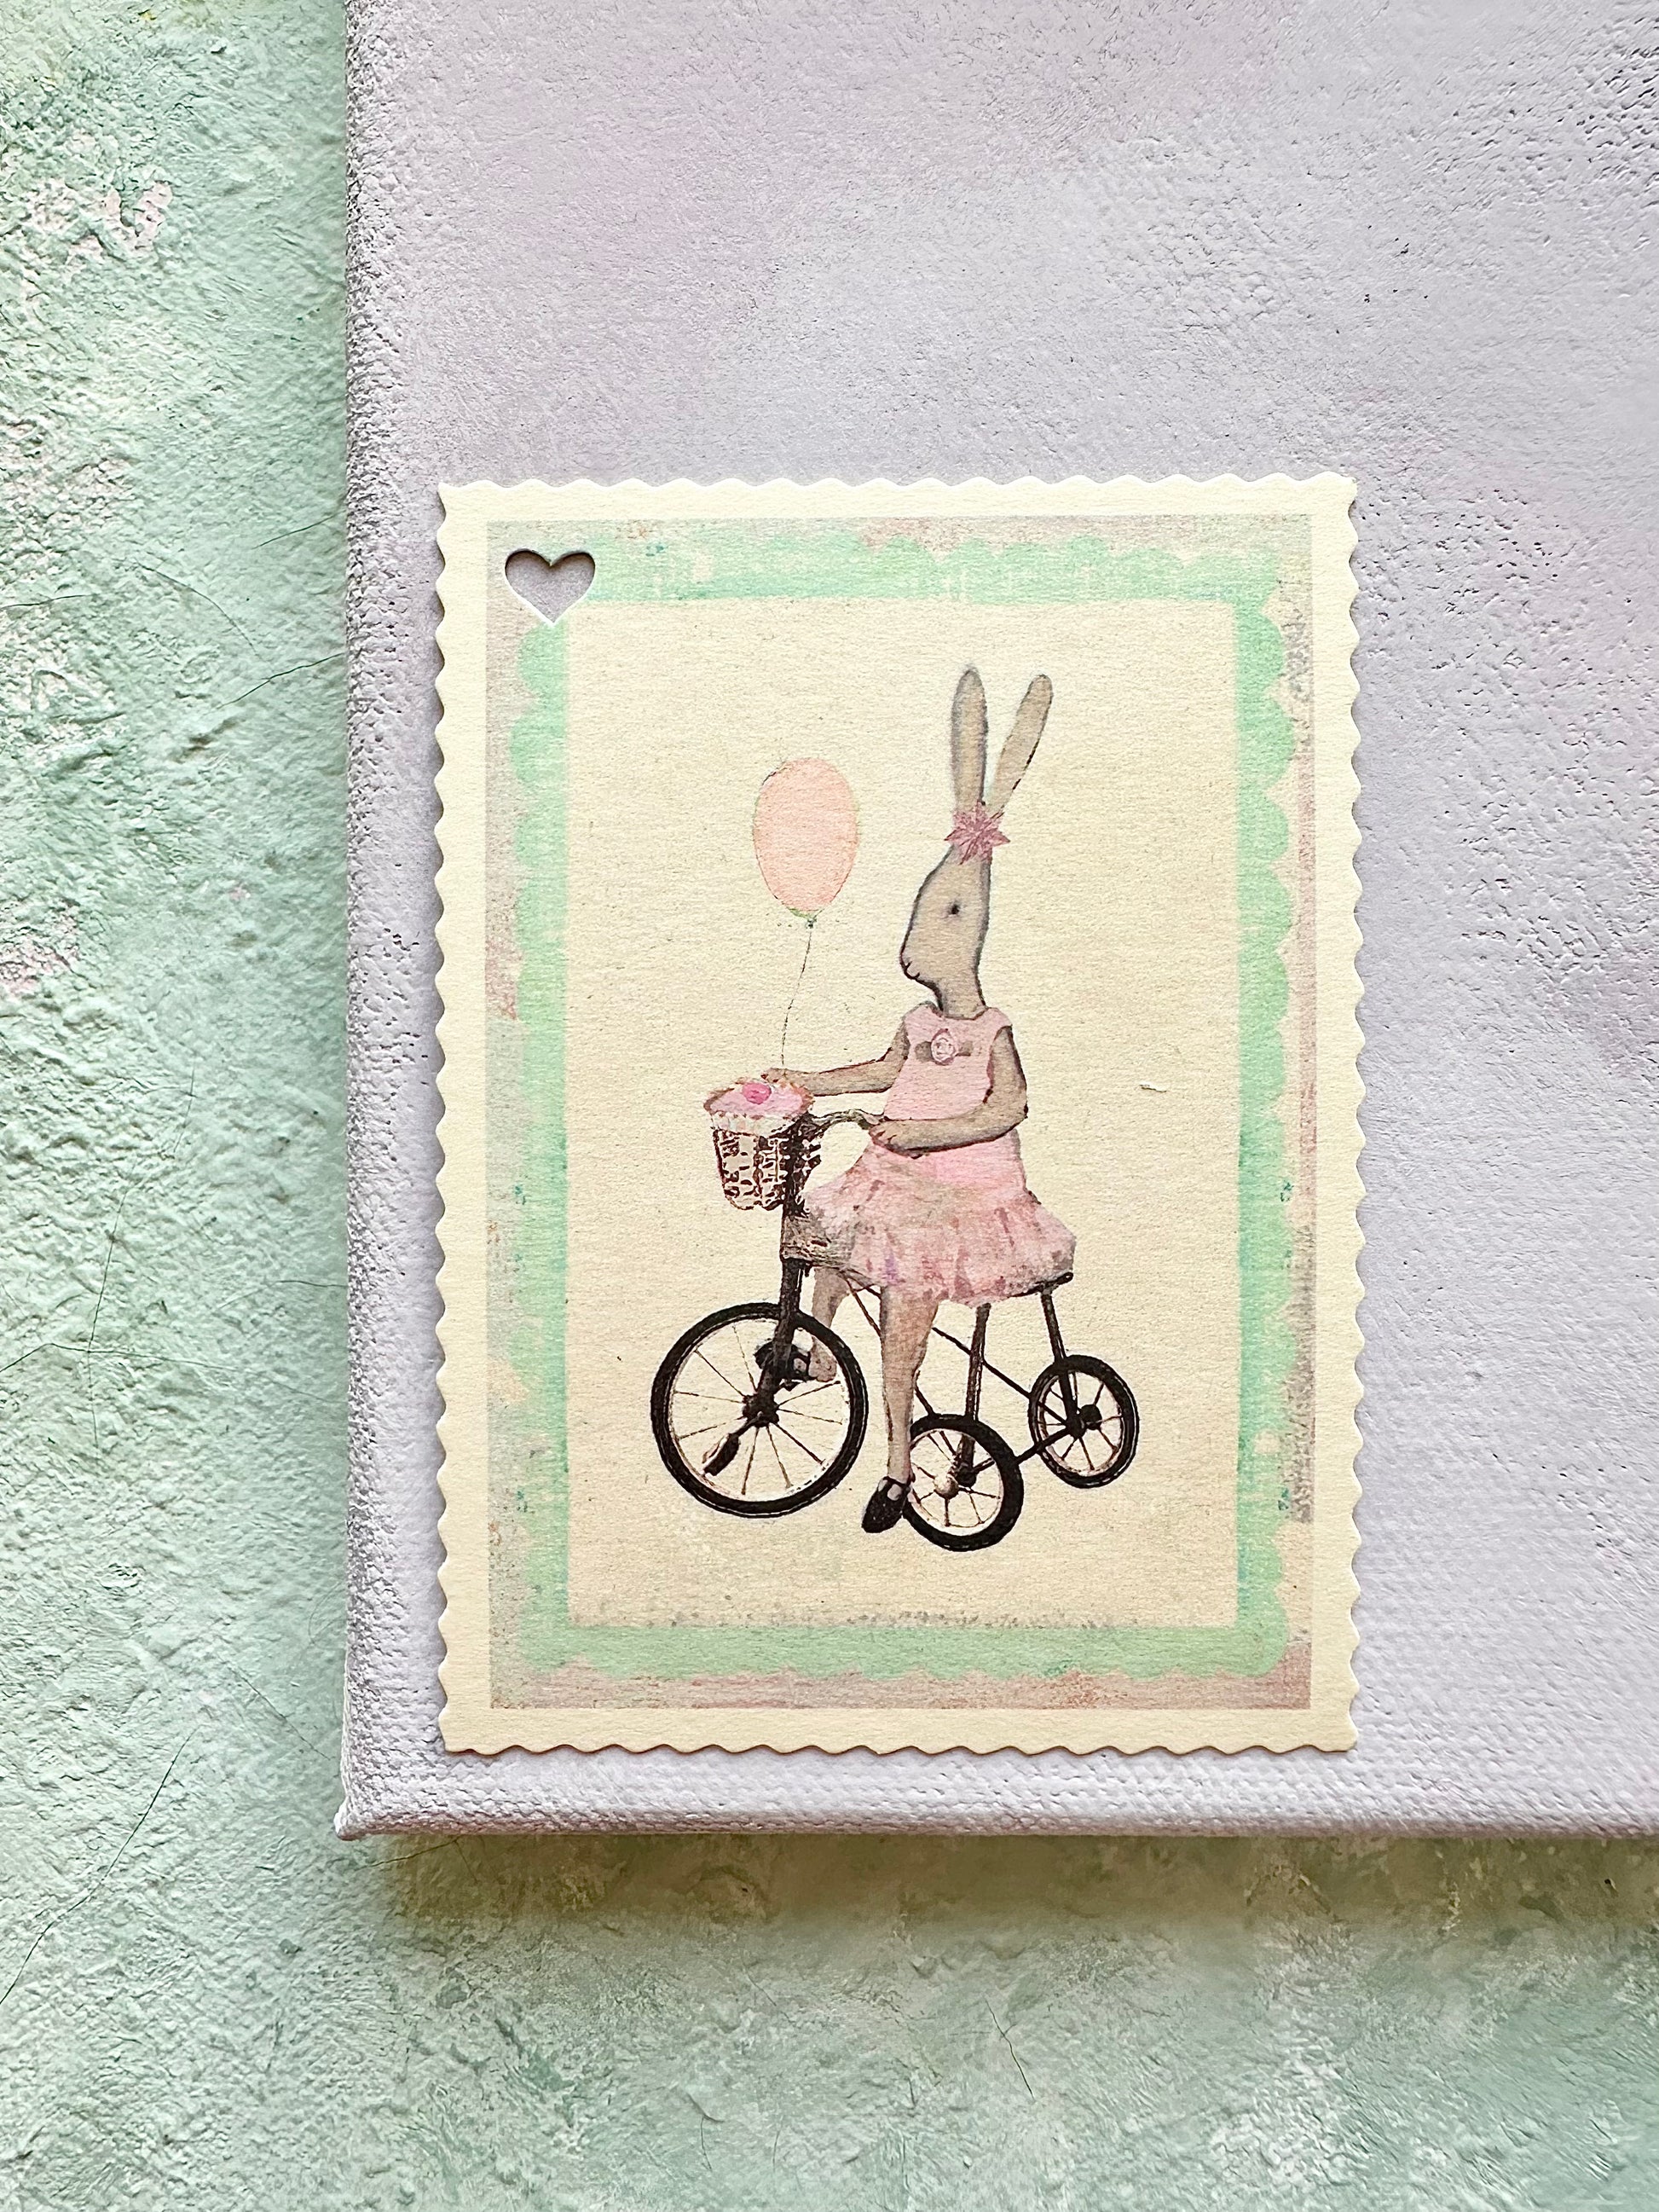 Mini Card "Rabbit Girl on Bike" - 2010